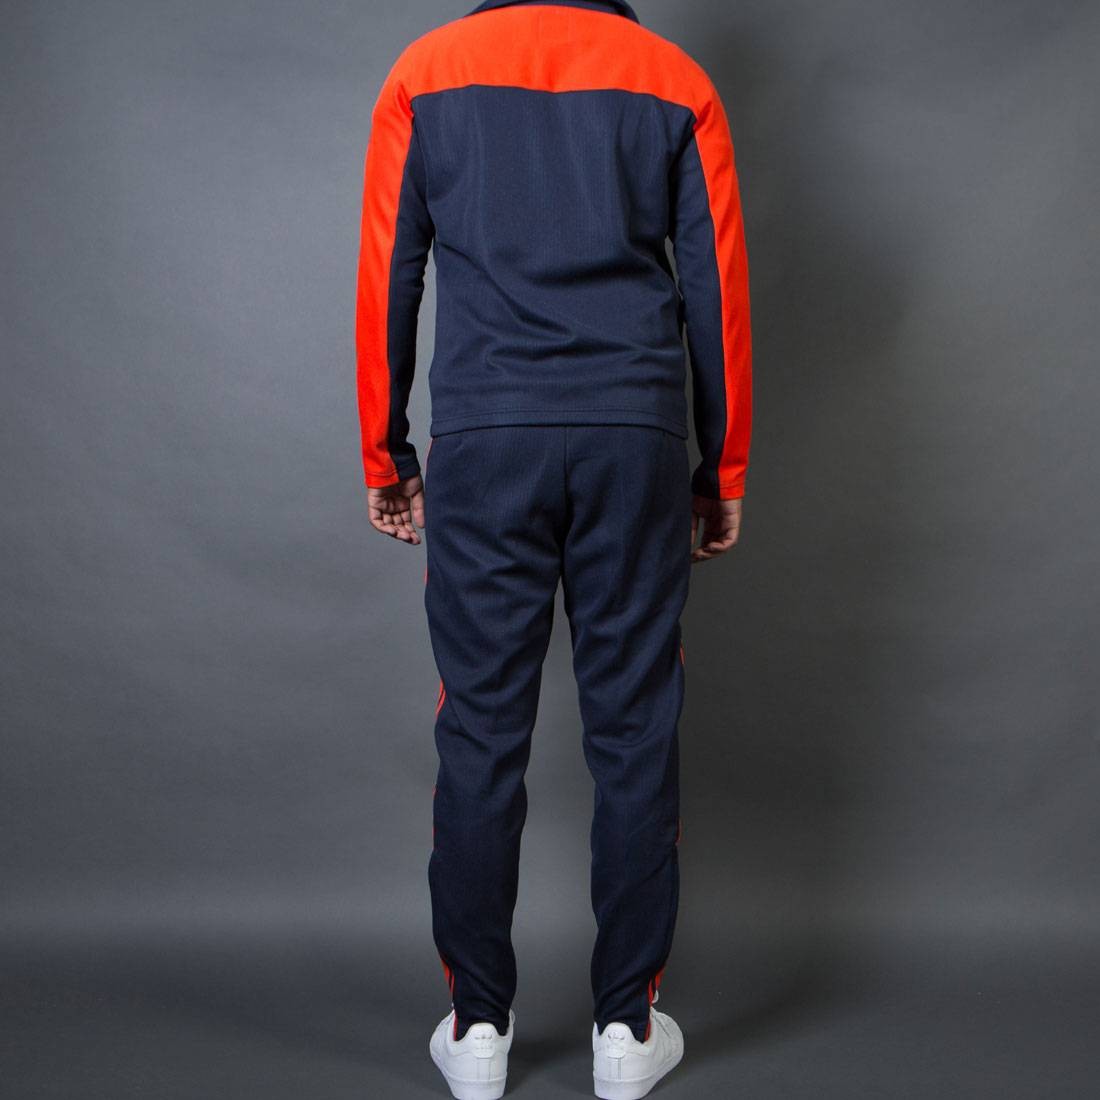 grey and orange adidas pants